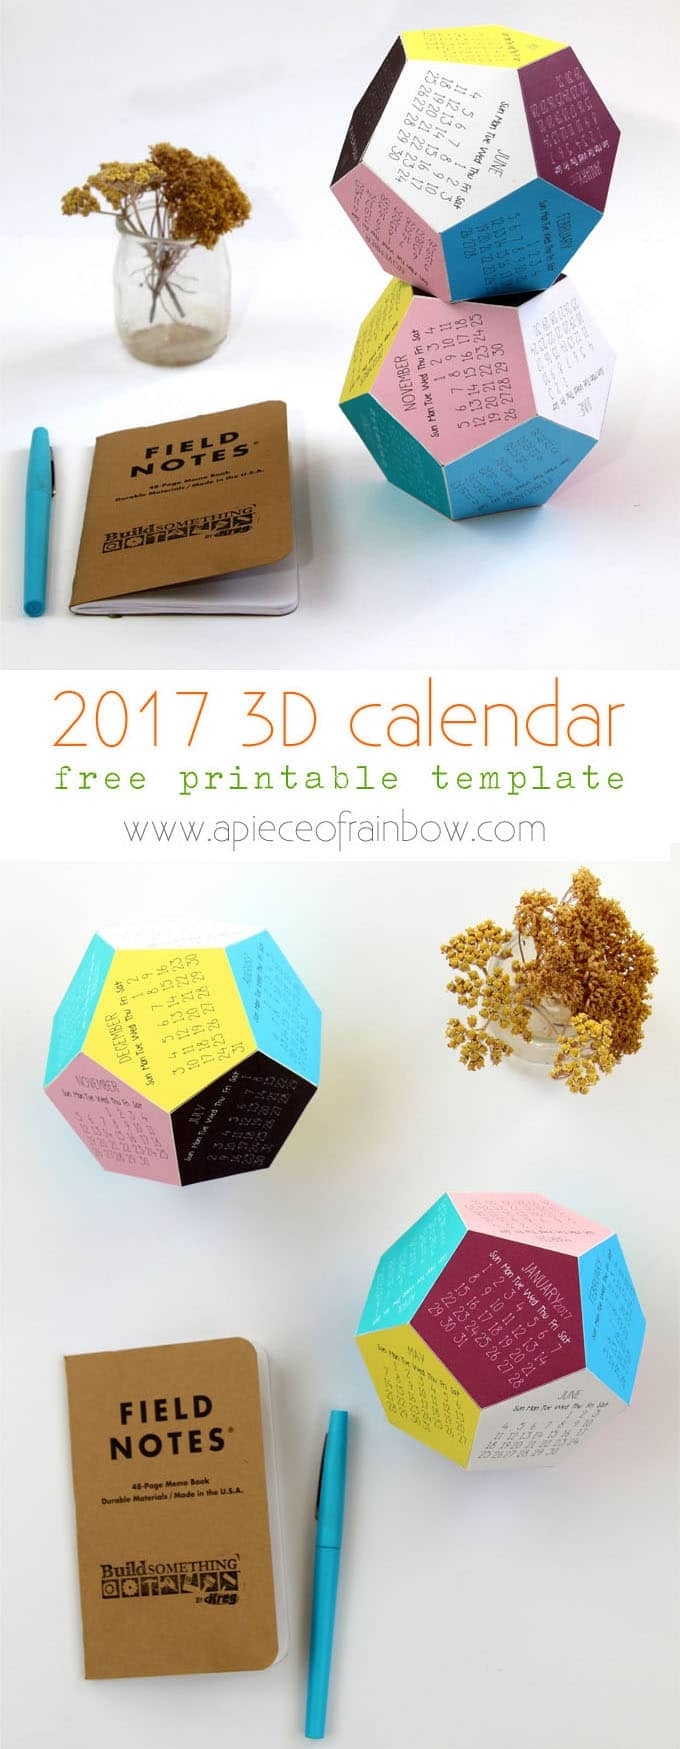 2017 3D Printable Calendar - Page 2 Of 2 - A Piece Of Rainbow Free Printable 3D Calendar Template